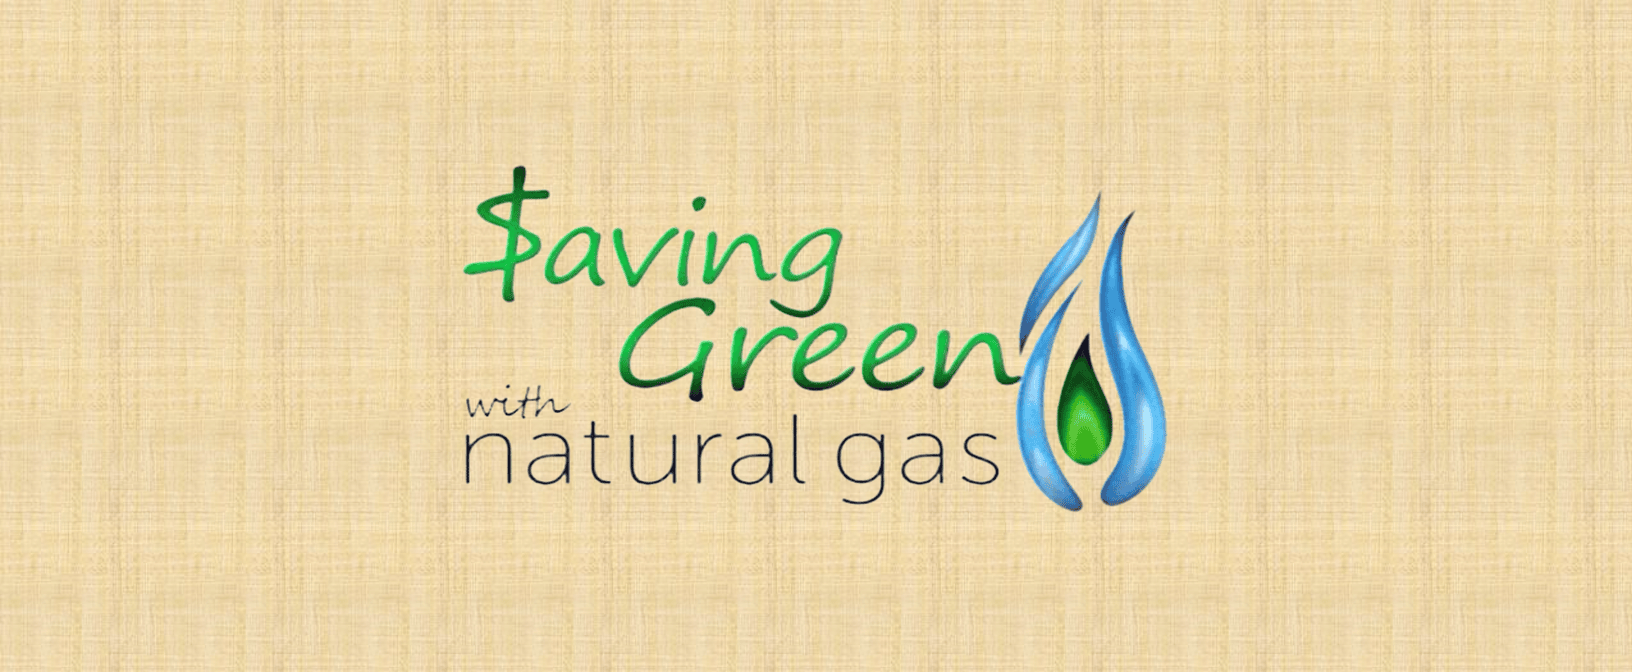 Saving Green with Natural Gas Logo